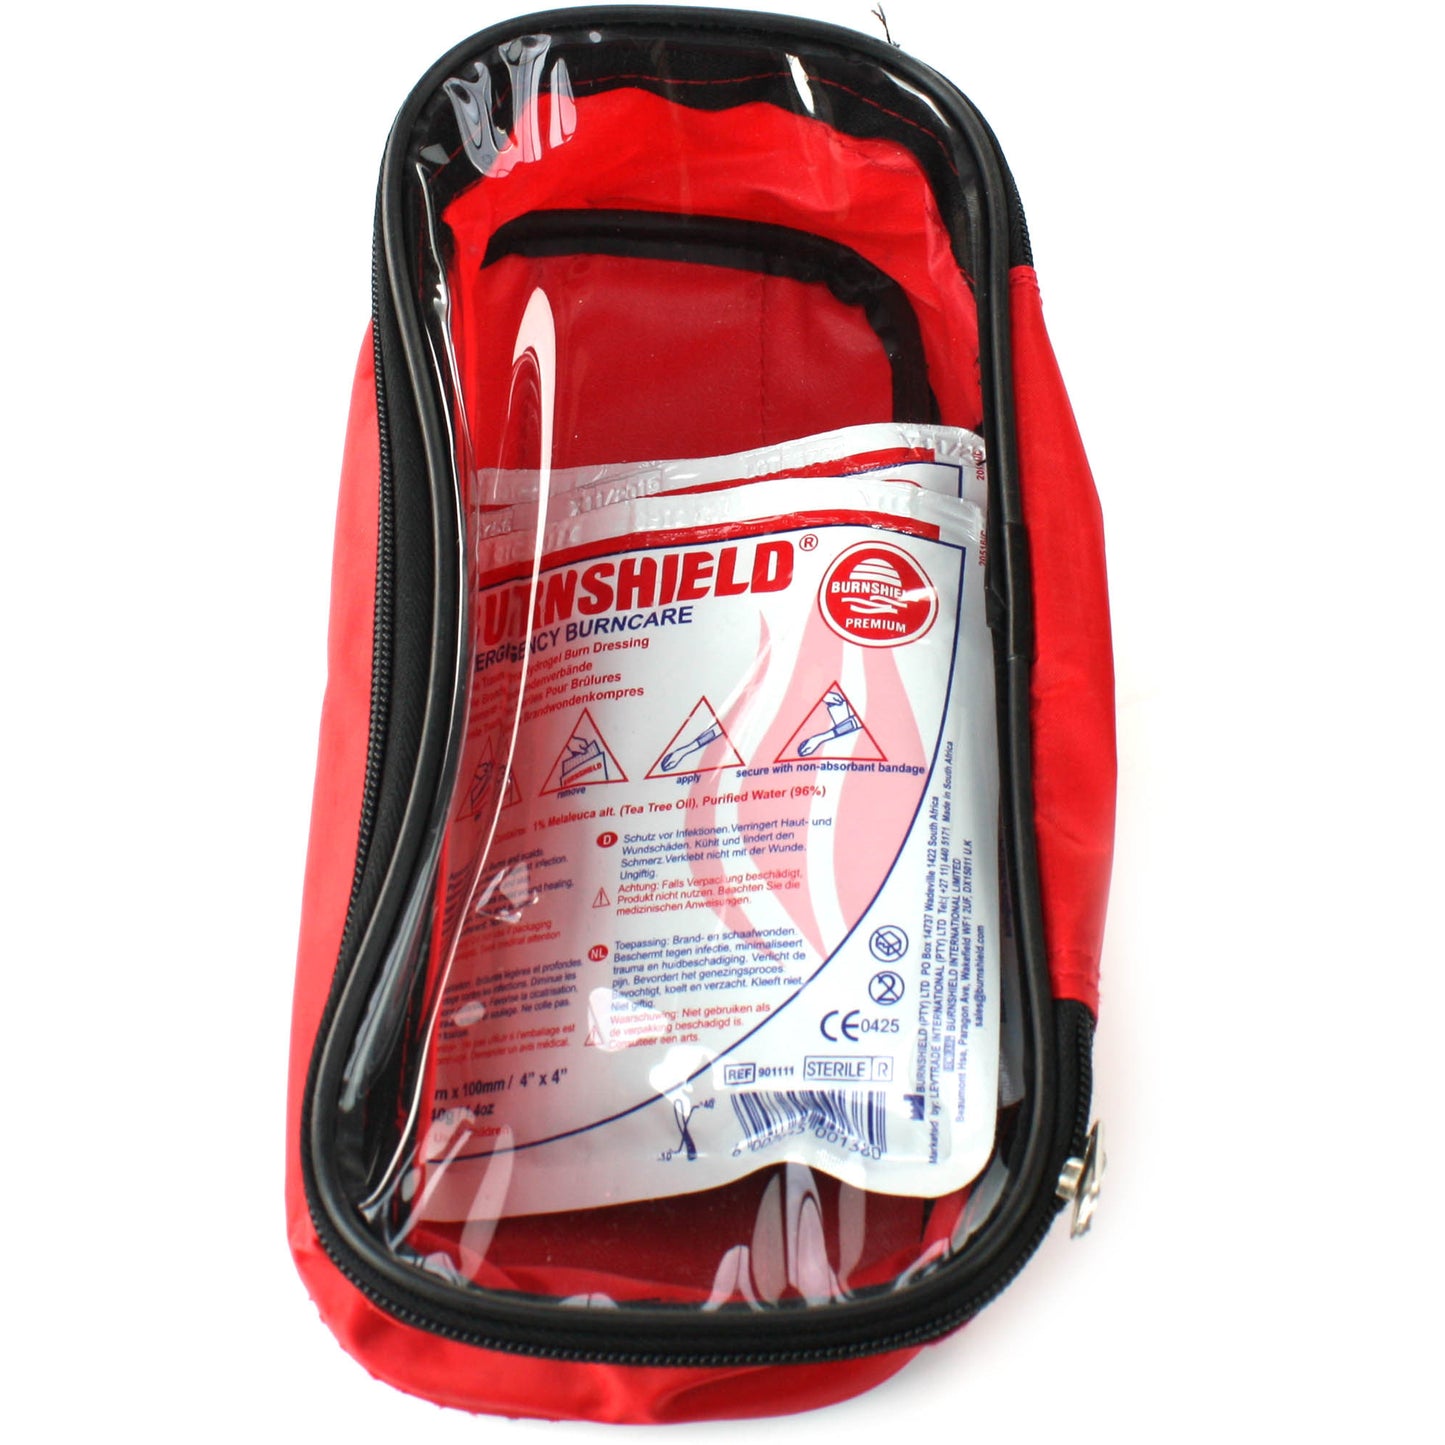 Burnshield Responder Kit in a Red Bag